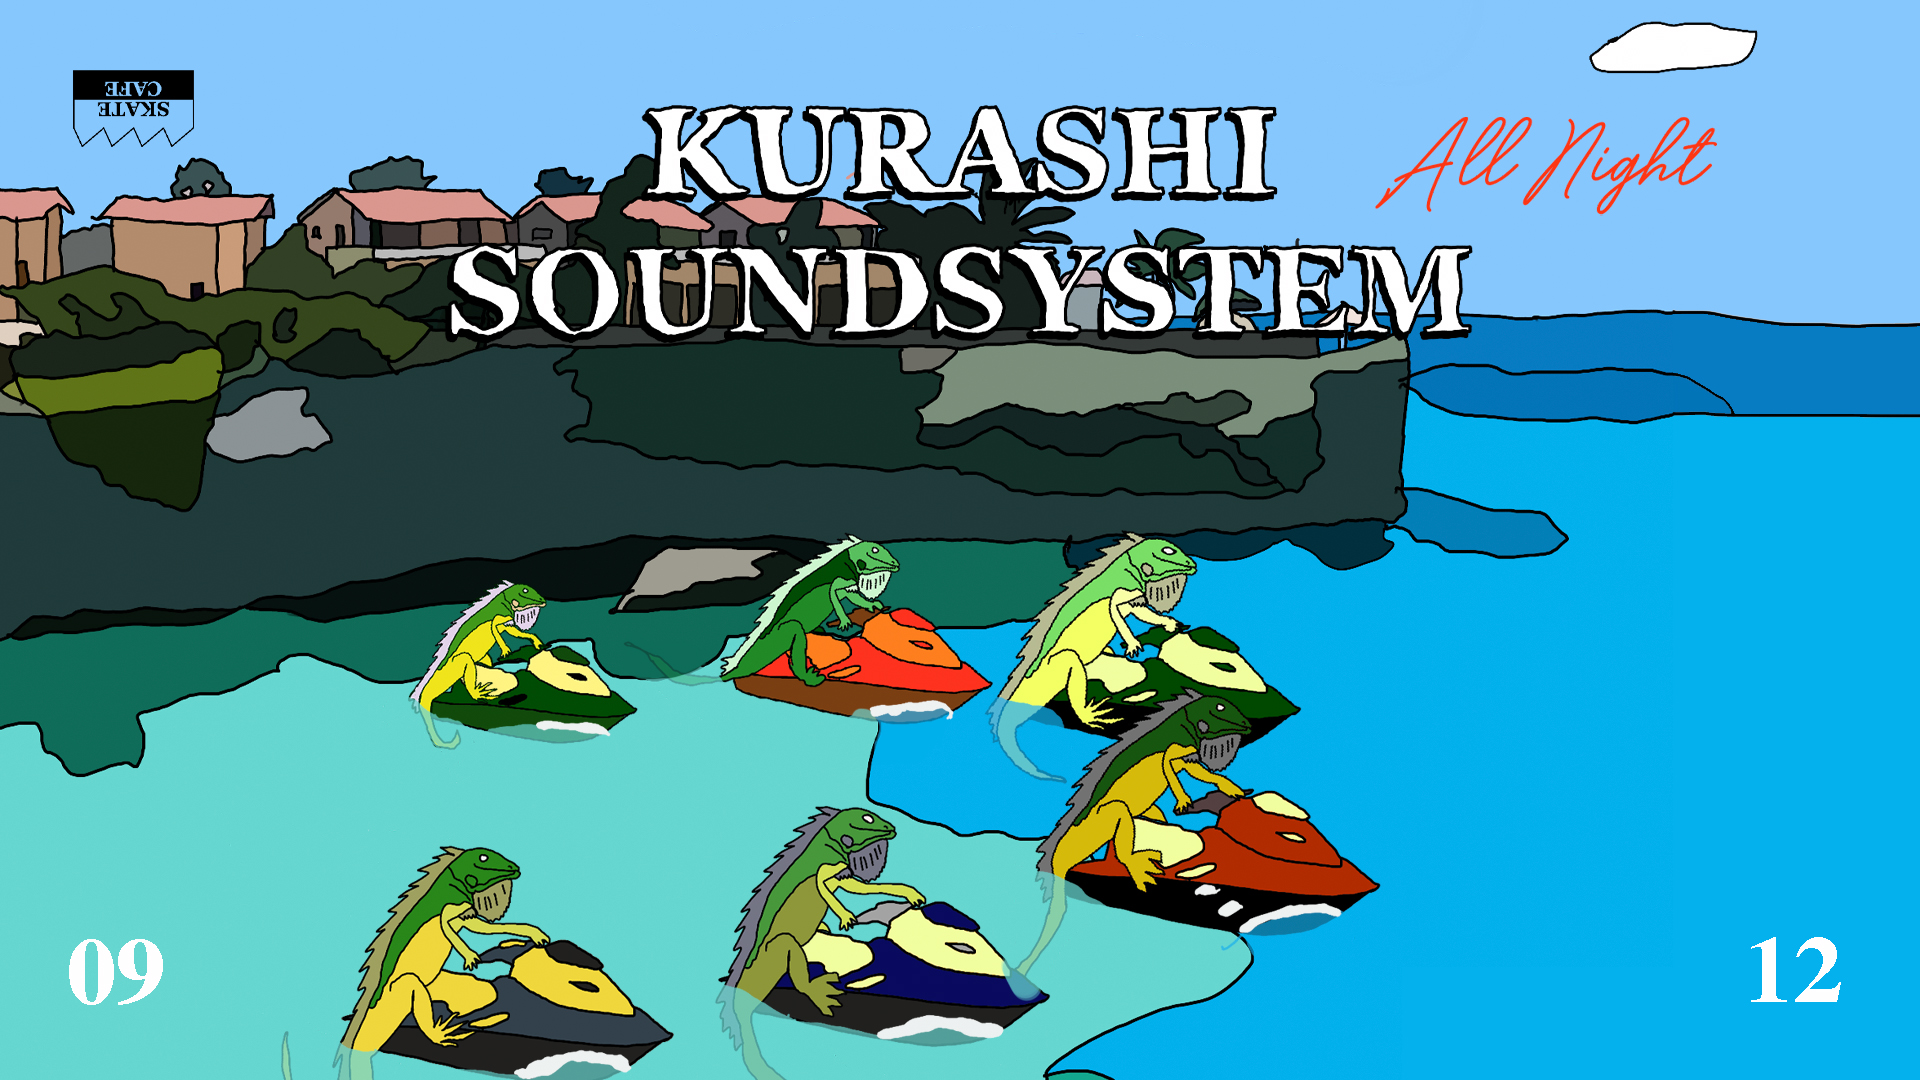 KURASHI SOUNDSYSTEM header